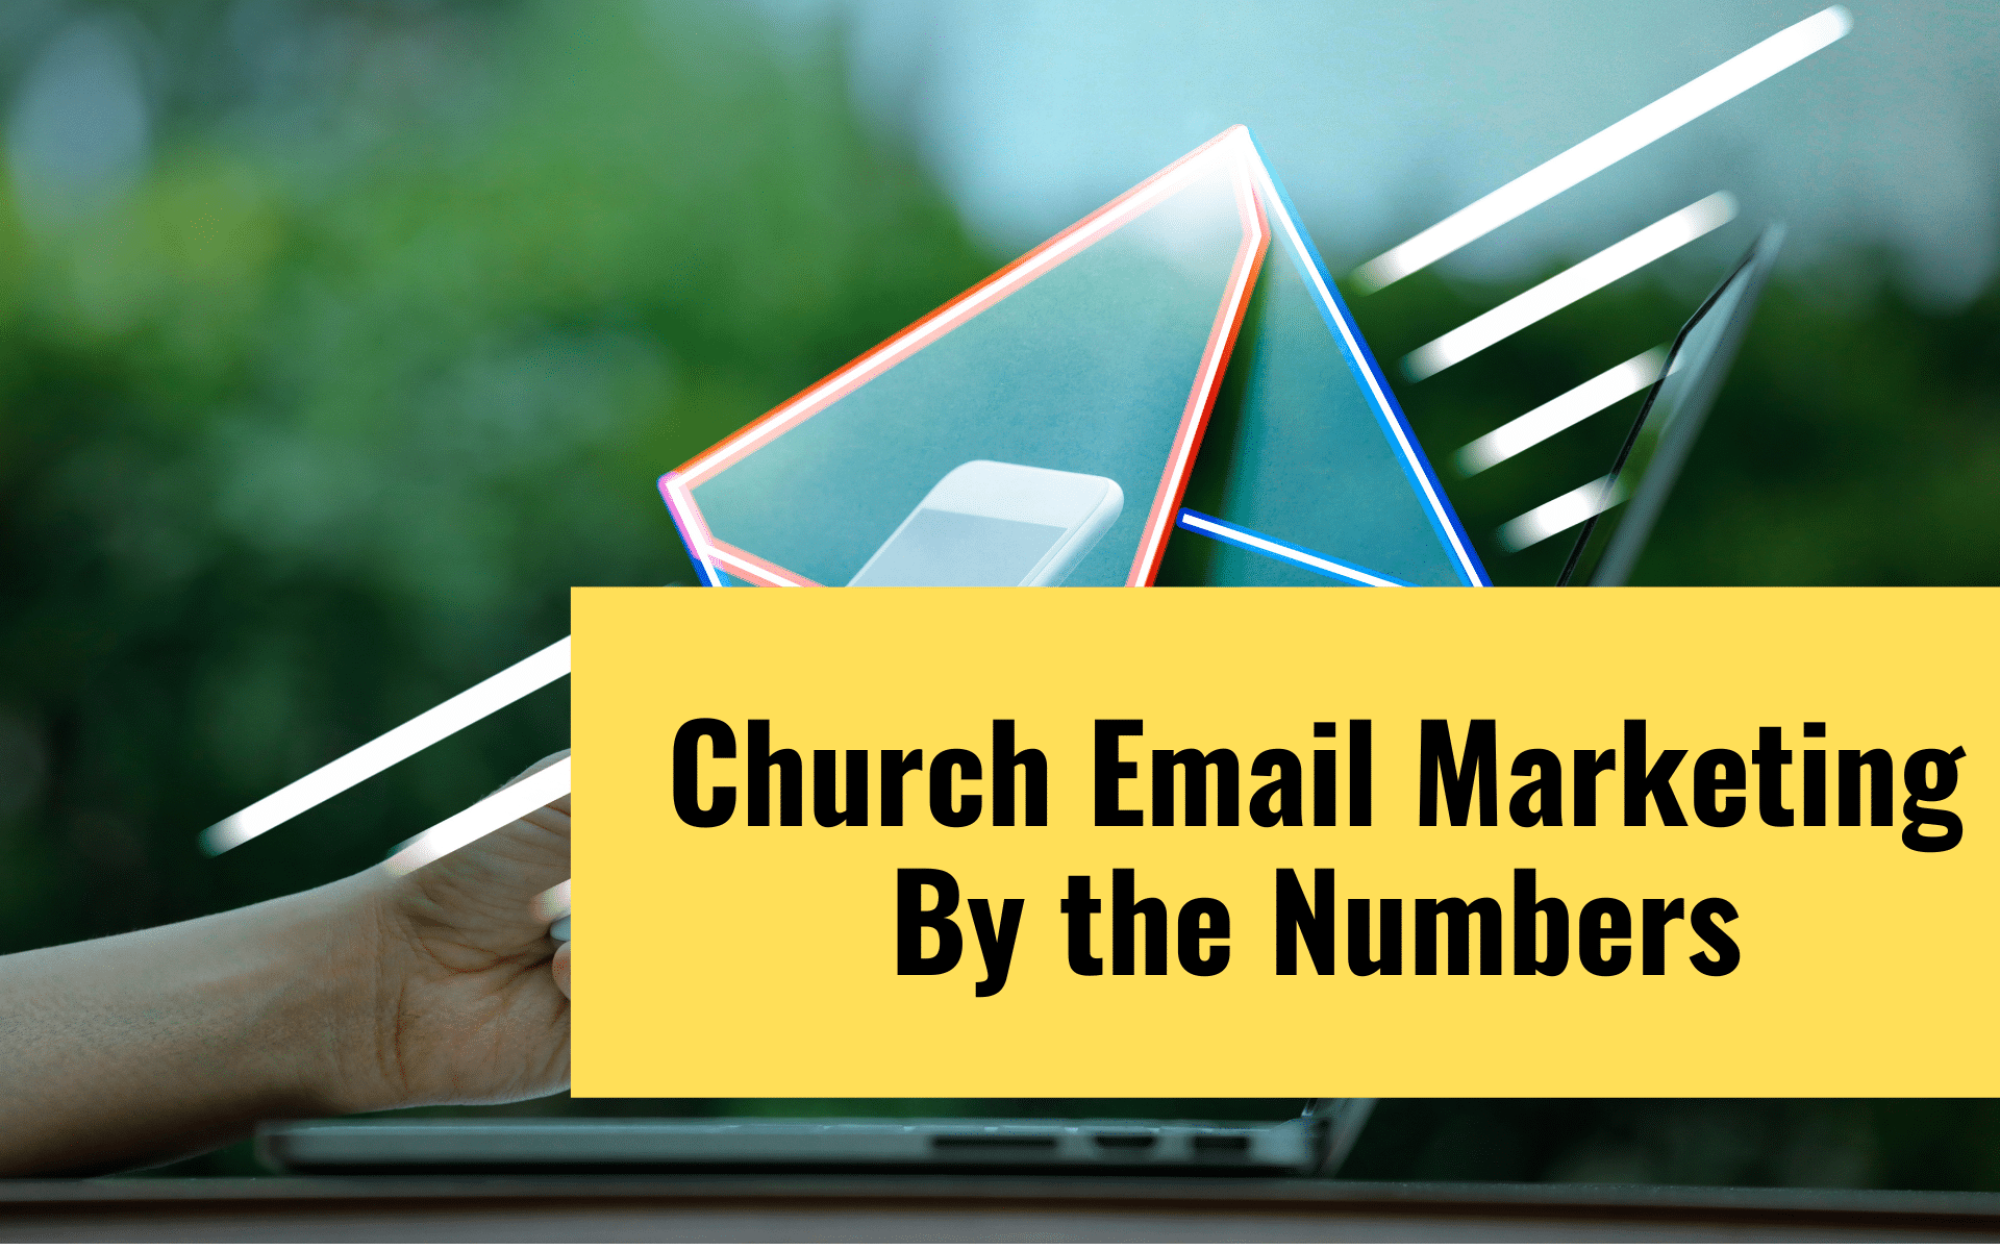 church email marketing